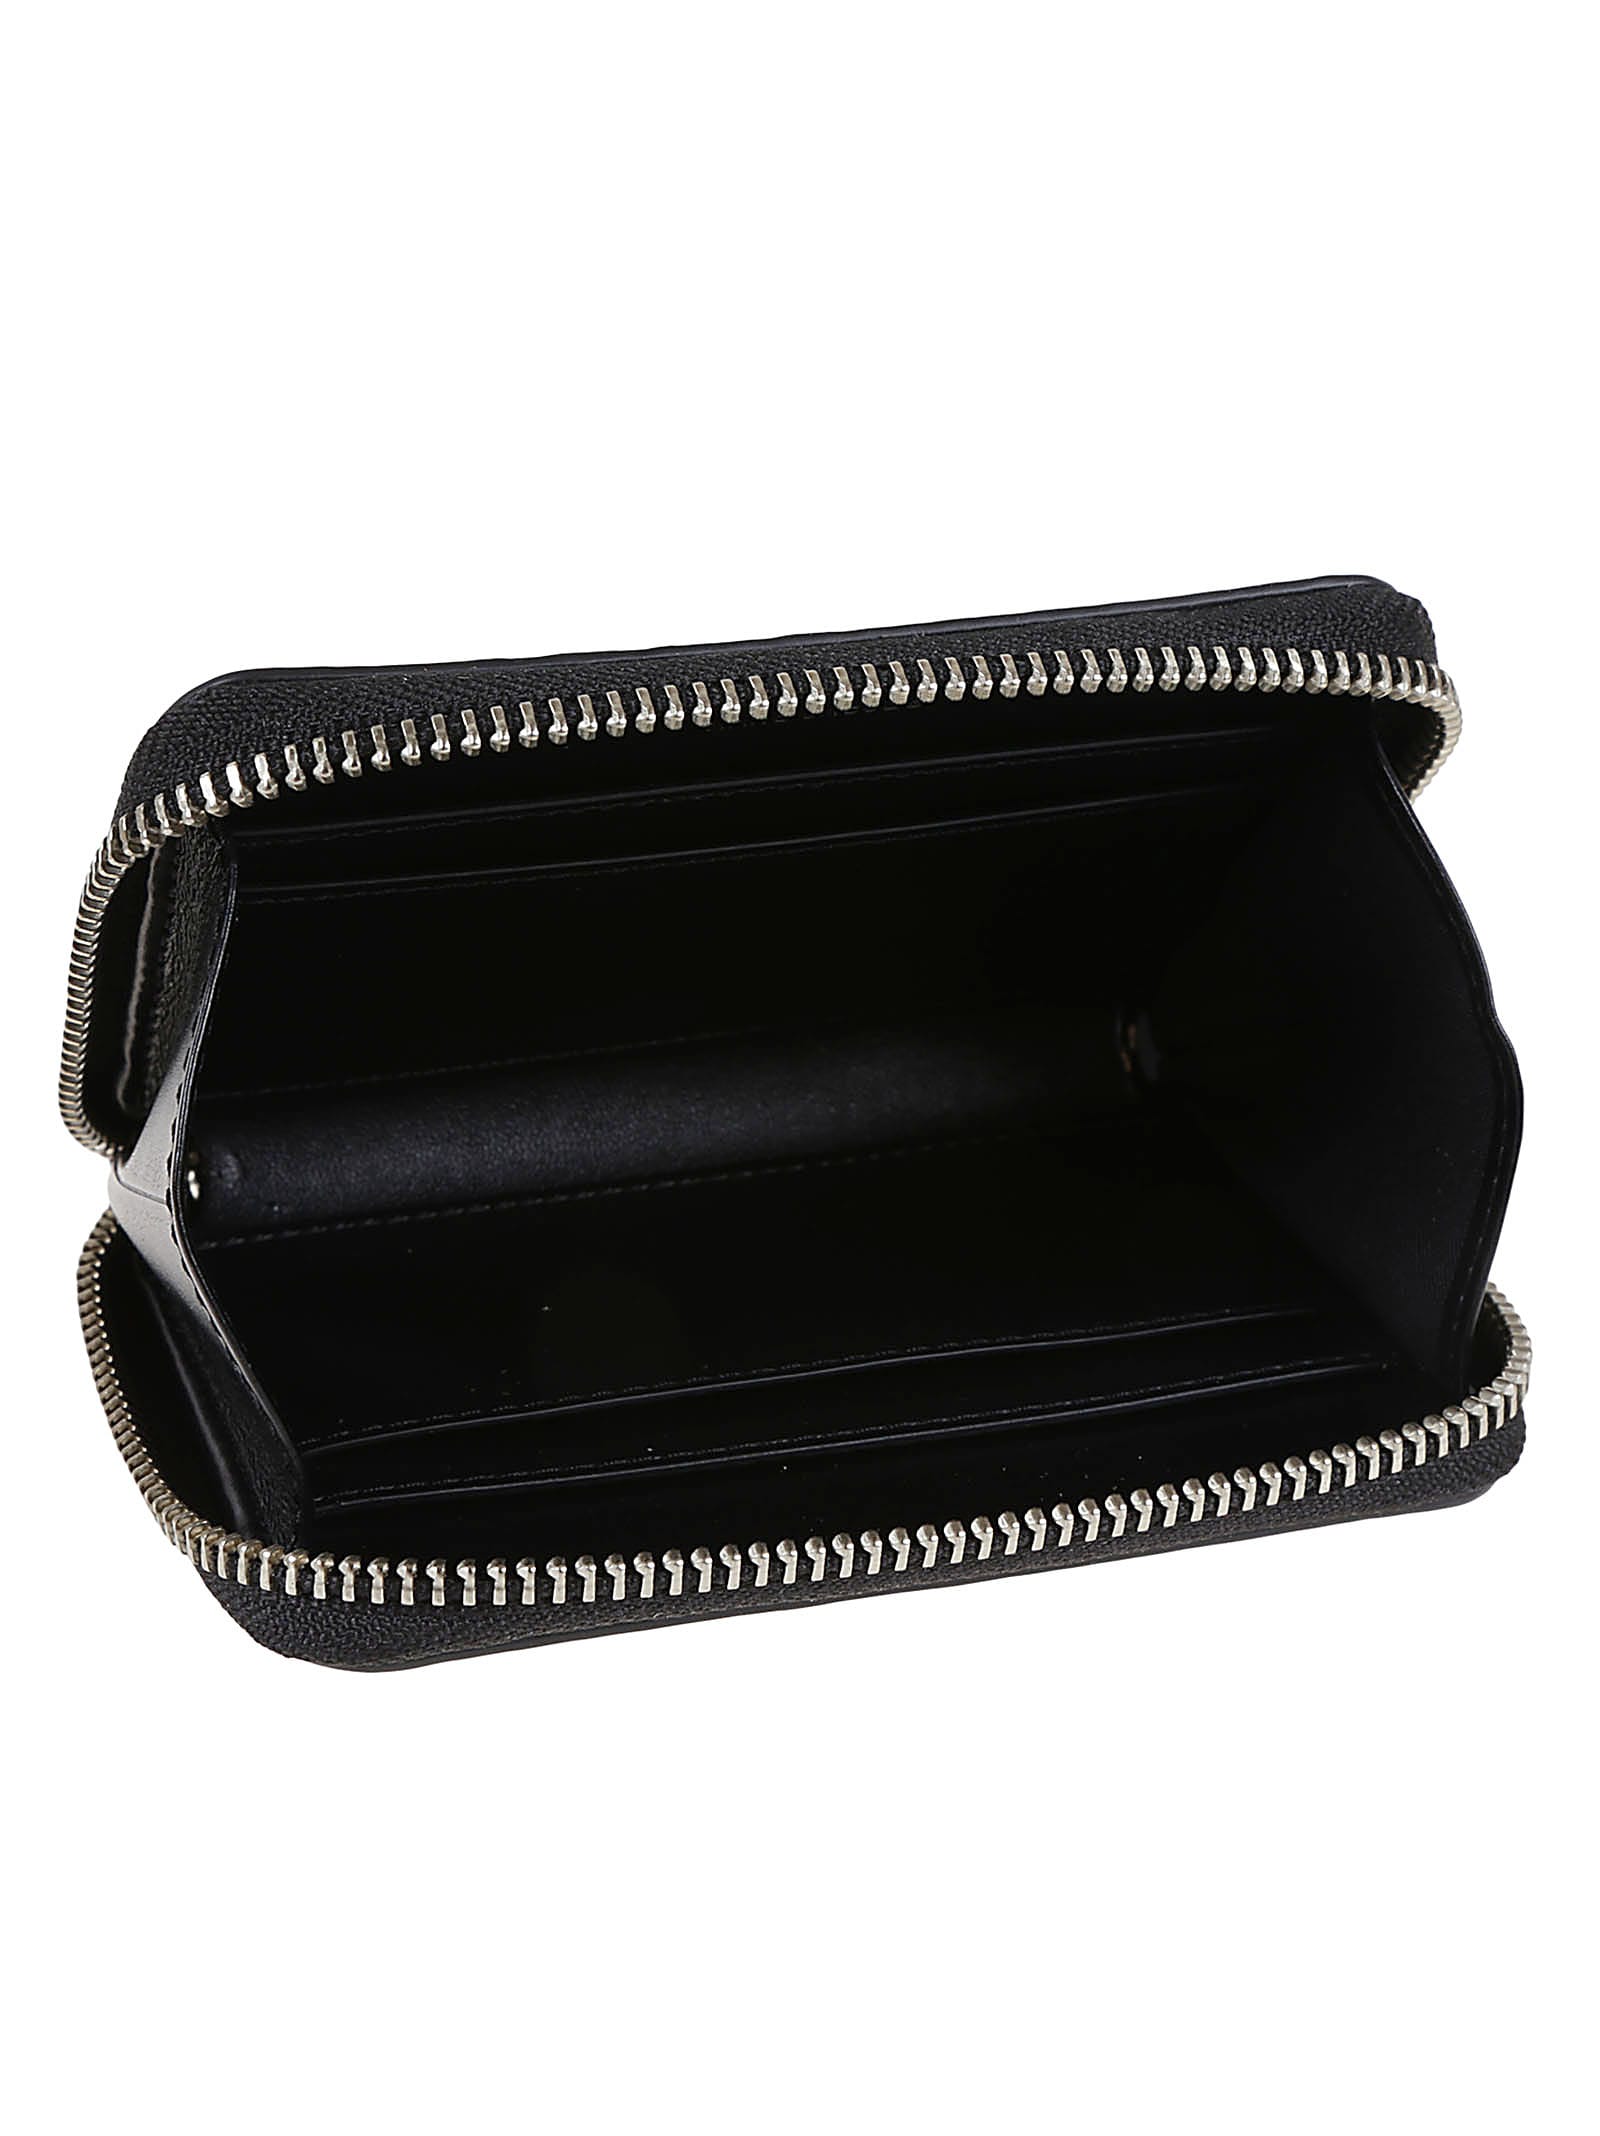 Marc Jacobs The Monogram Leather Zip Around Black White Wallet